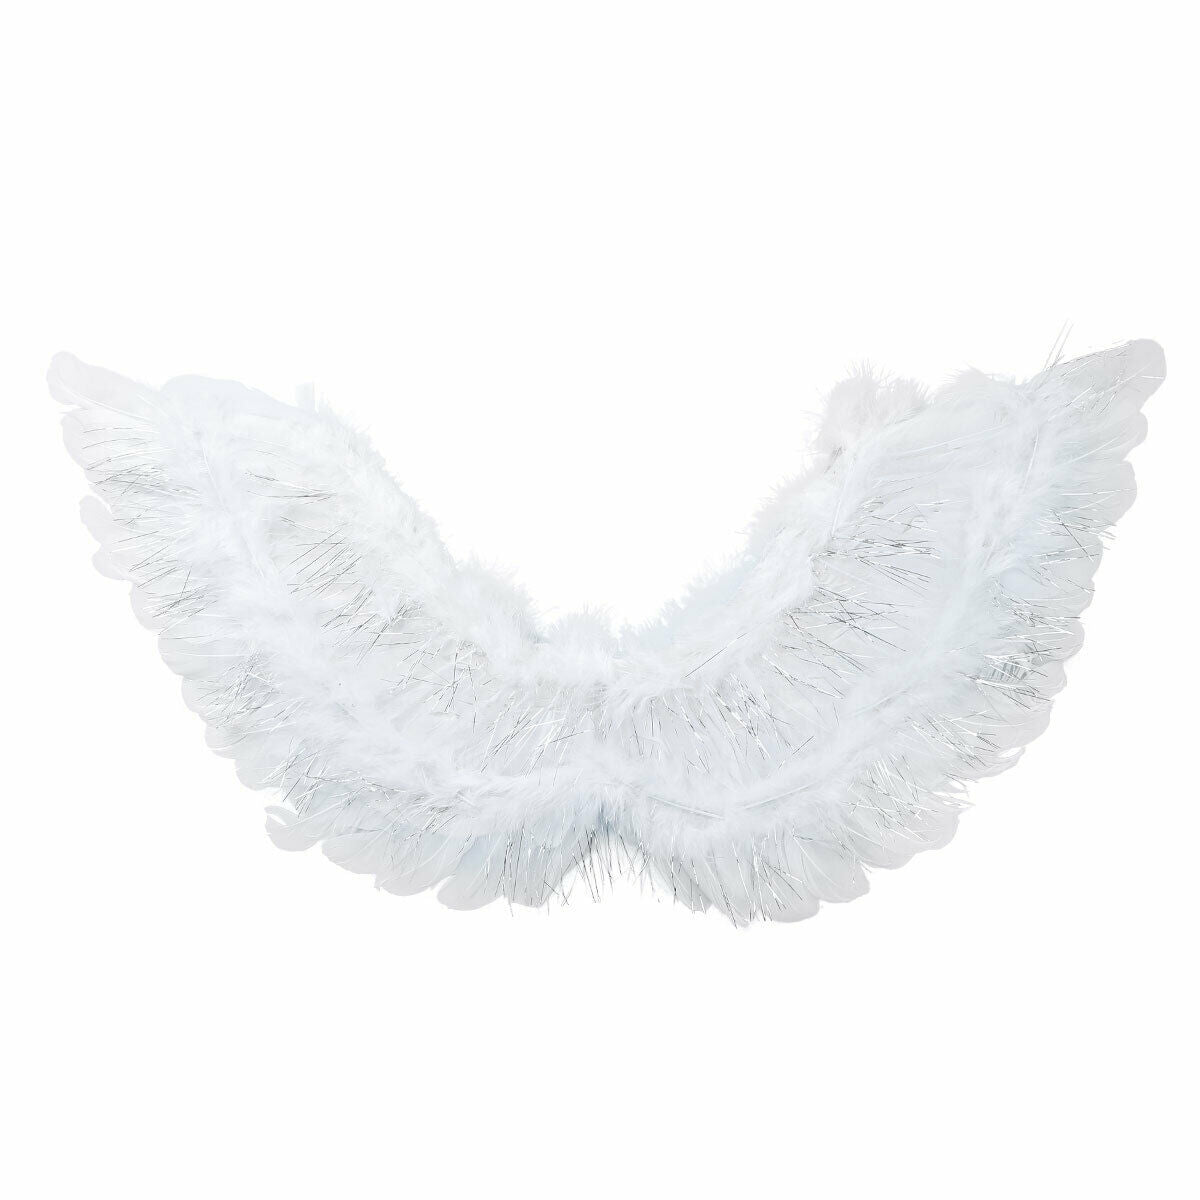 Small 50cm x 40cm White Angel Wings